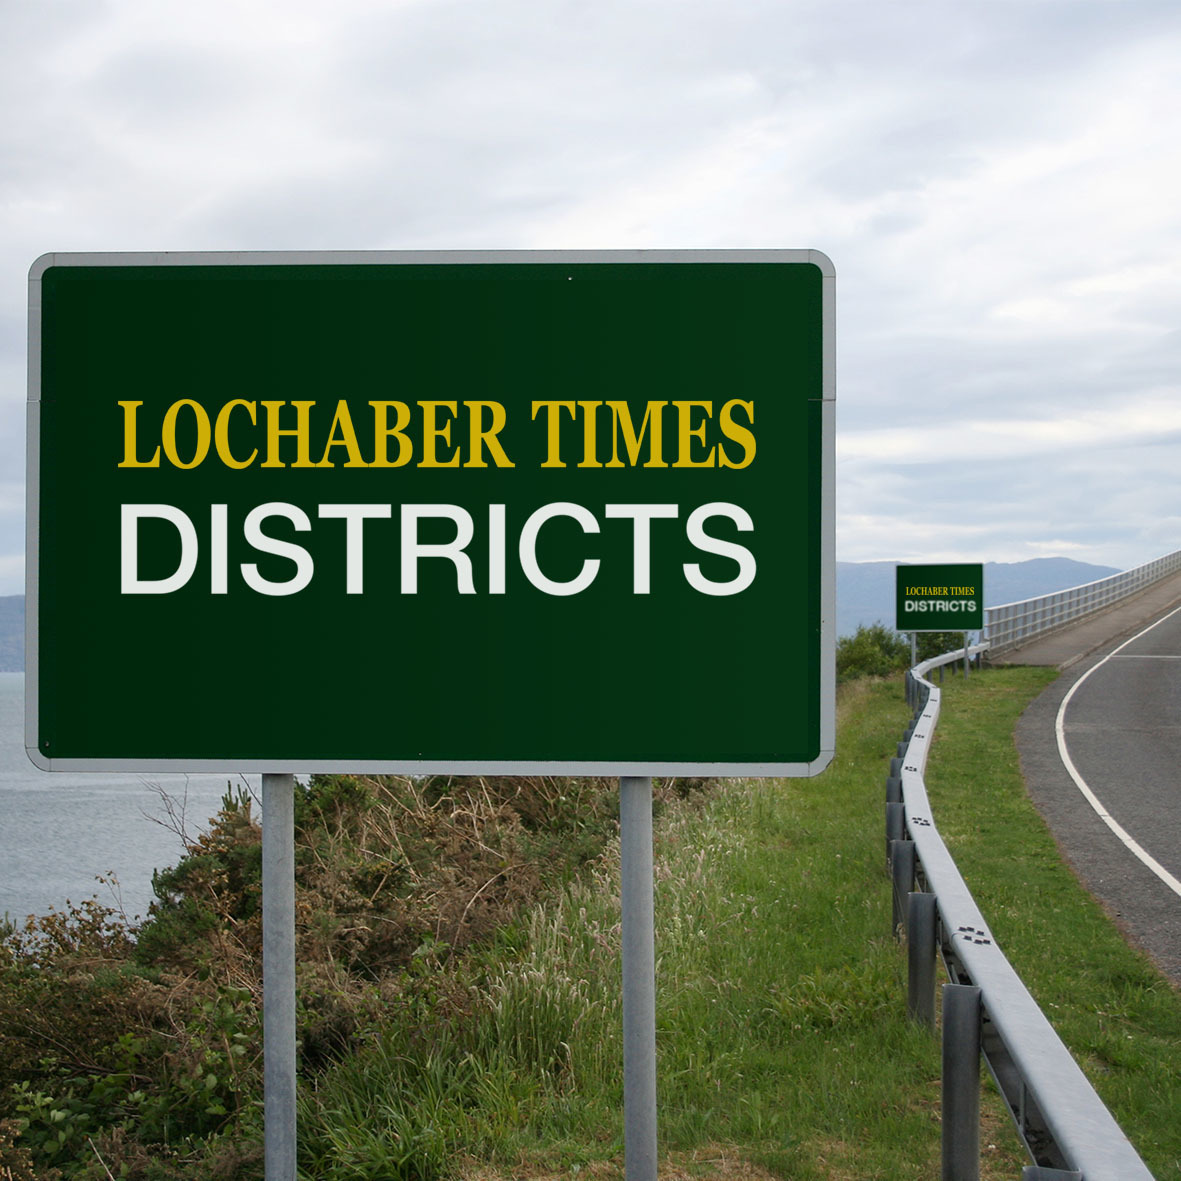 Lochaber community councils set up an alliance